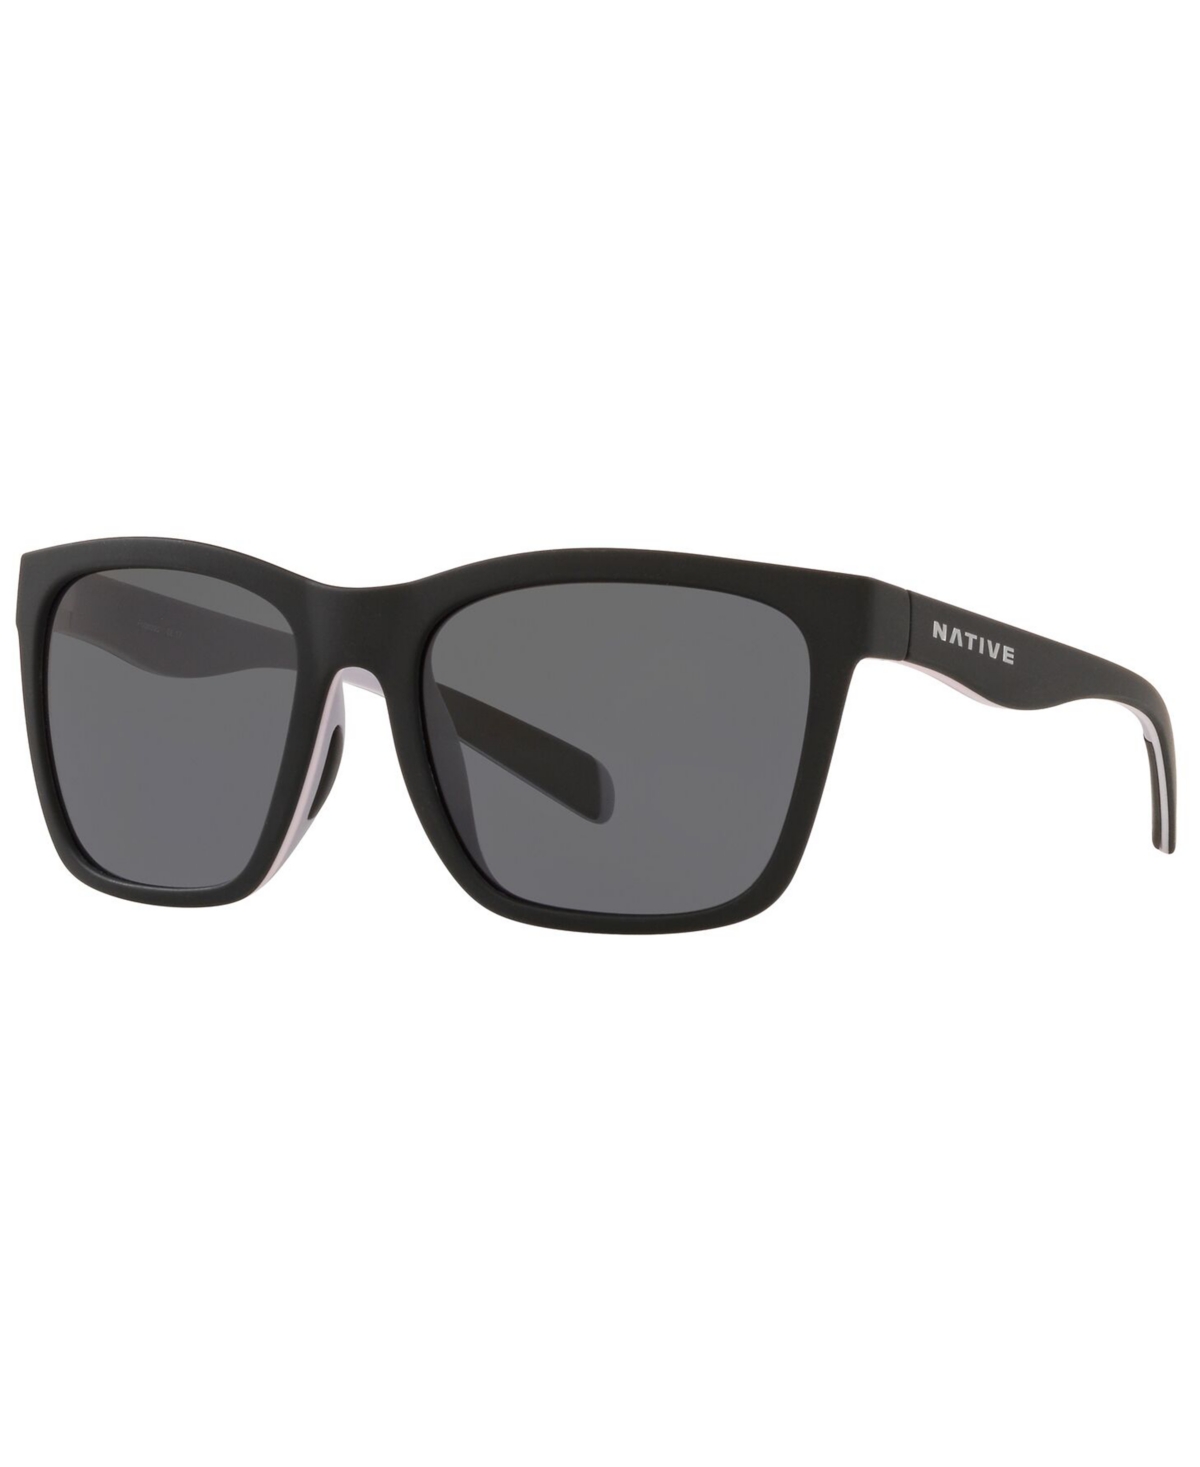 Native Men's Polarized Sunglasses, XD9005 56 - MATTE BLACK/BLUSH/VIOLET/GREY